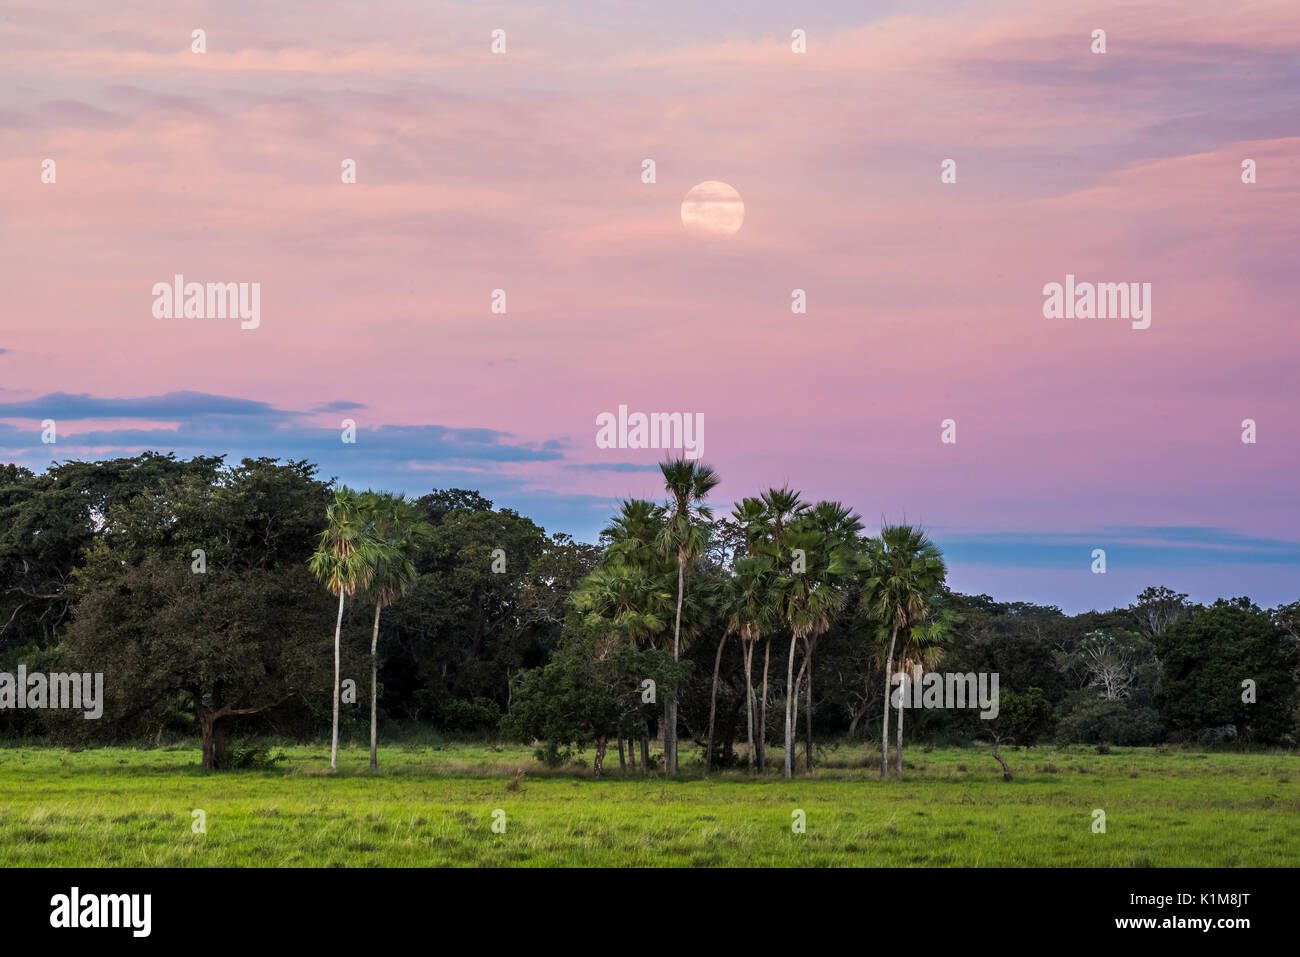 Paisaje con árboles de palma de moriche en el sur del Pantanal, Fazenda Barranco Alto, el Pantanal de Mato Grosso, Mato Grosso do Sul, Brasil Foto de stock